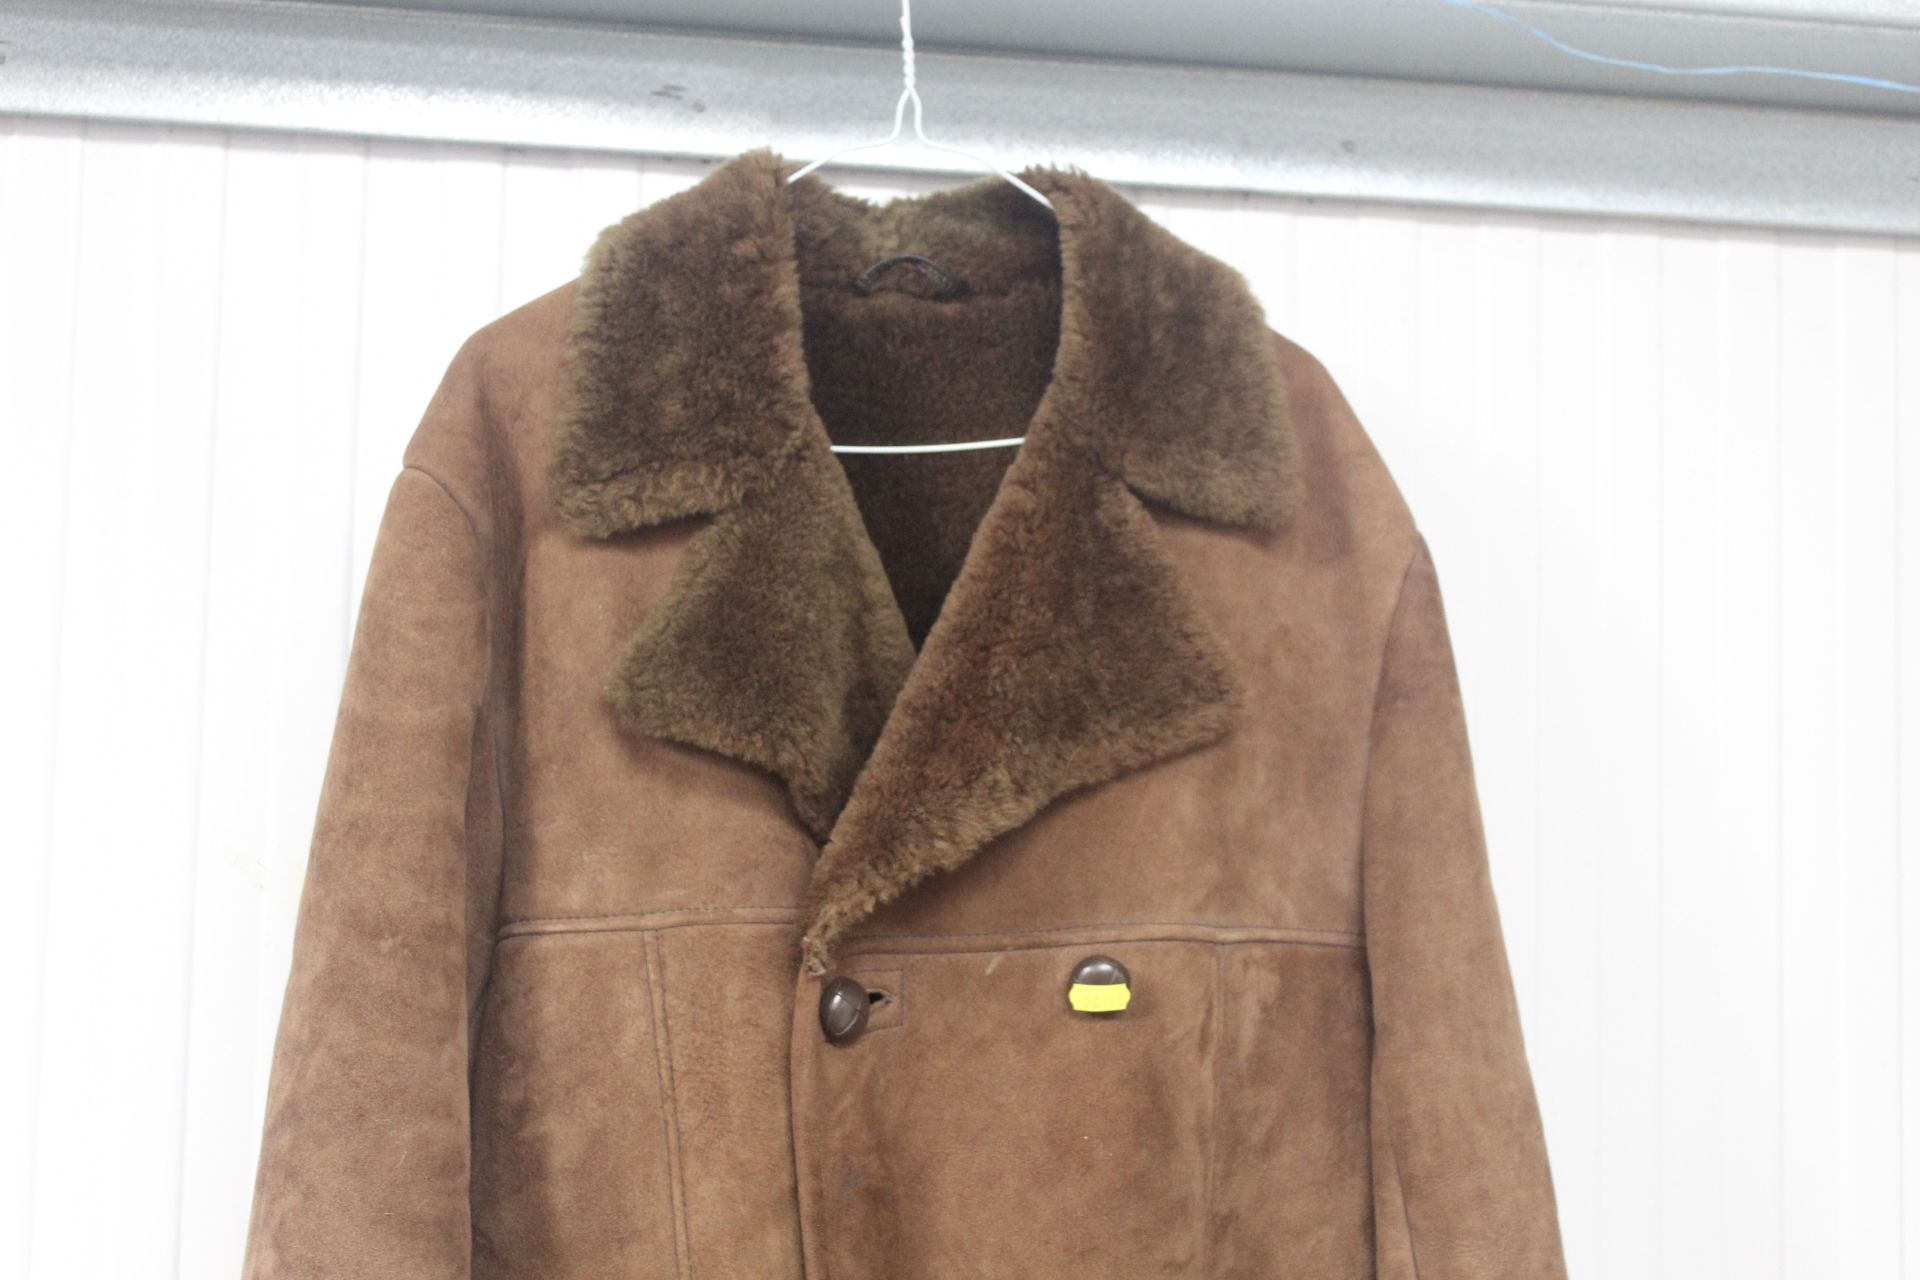 A sheepskin coat - Image 2 of 3